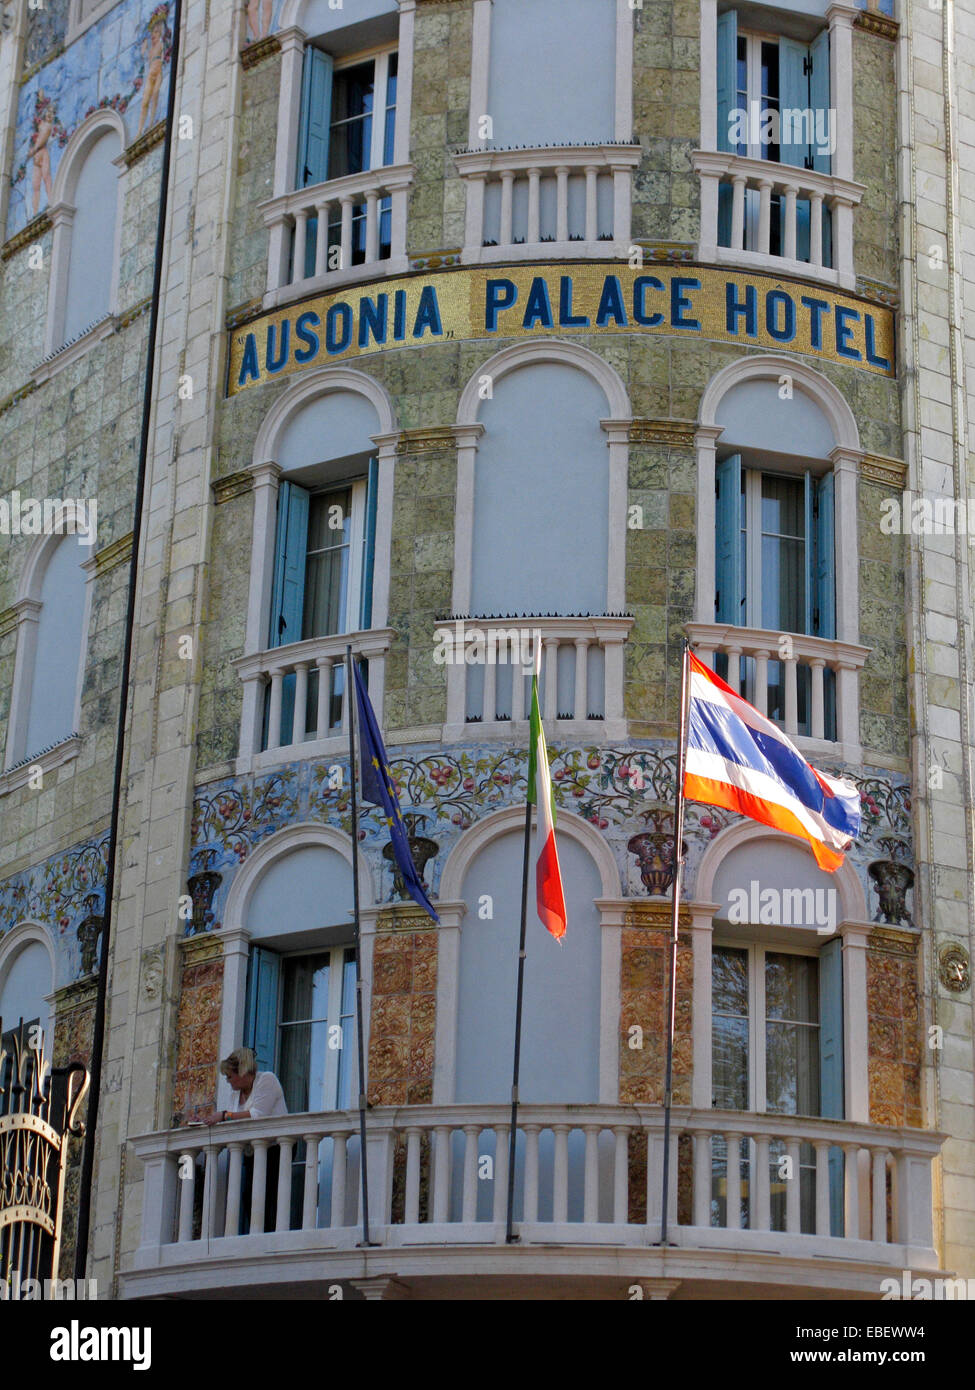 Venezia, Italia, Lido, Ausonia Palace Hotel, donna, balcone architettura  art deco Foto stock - Alamy